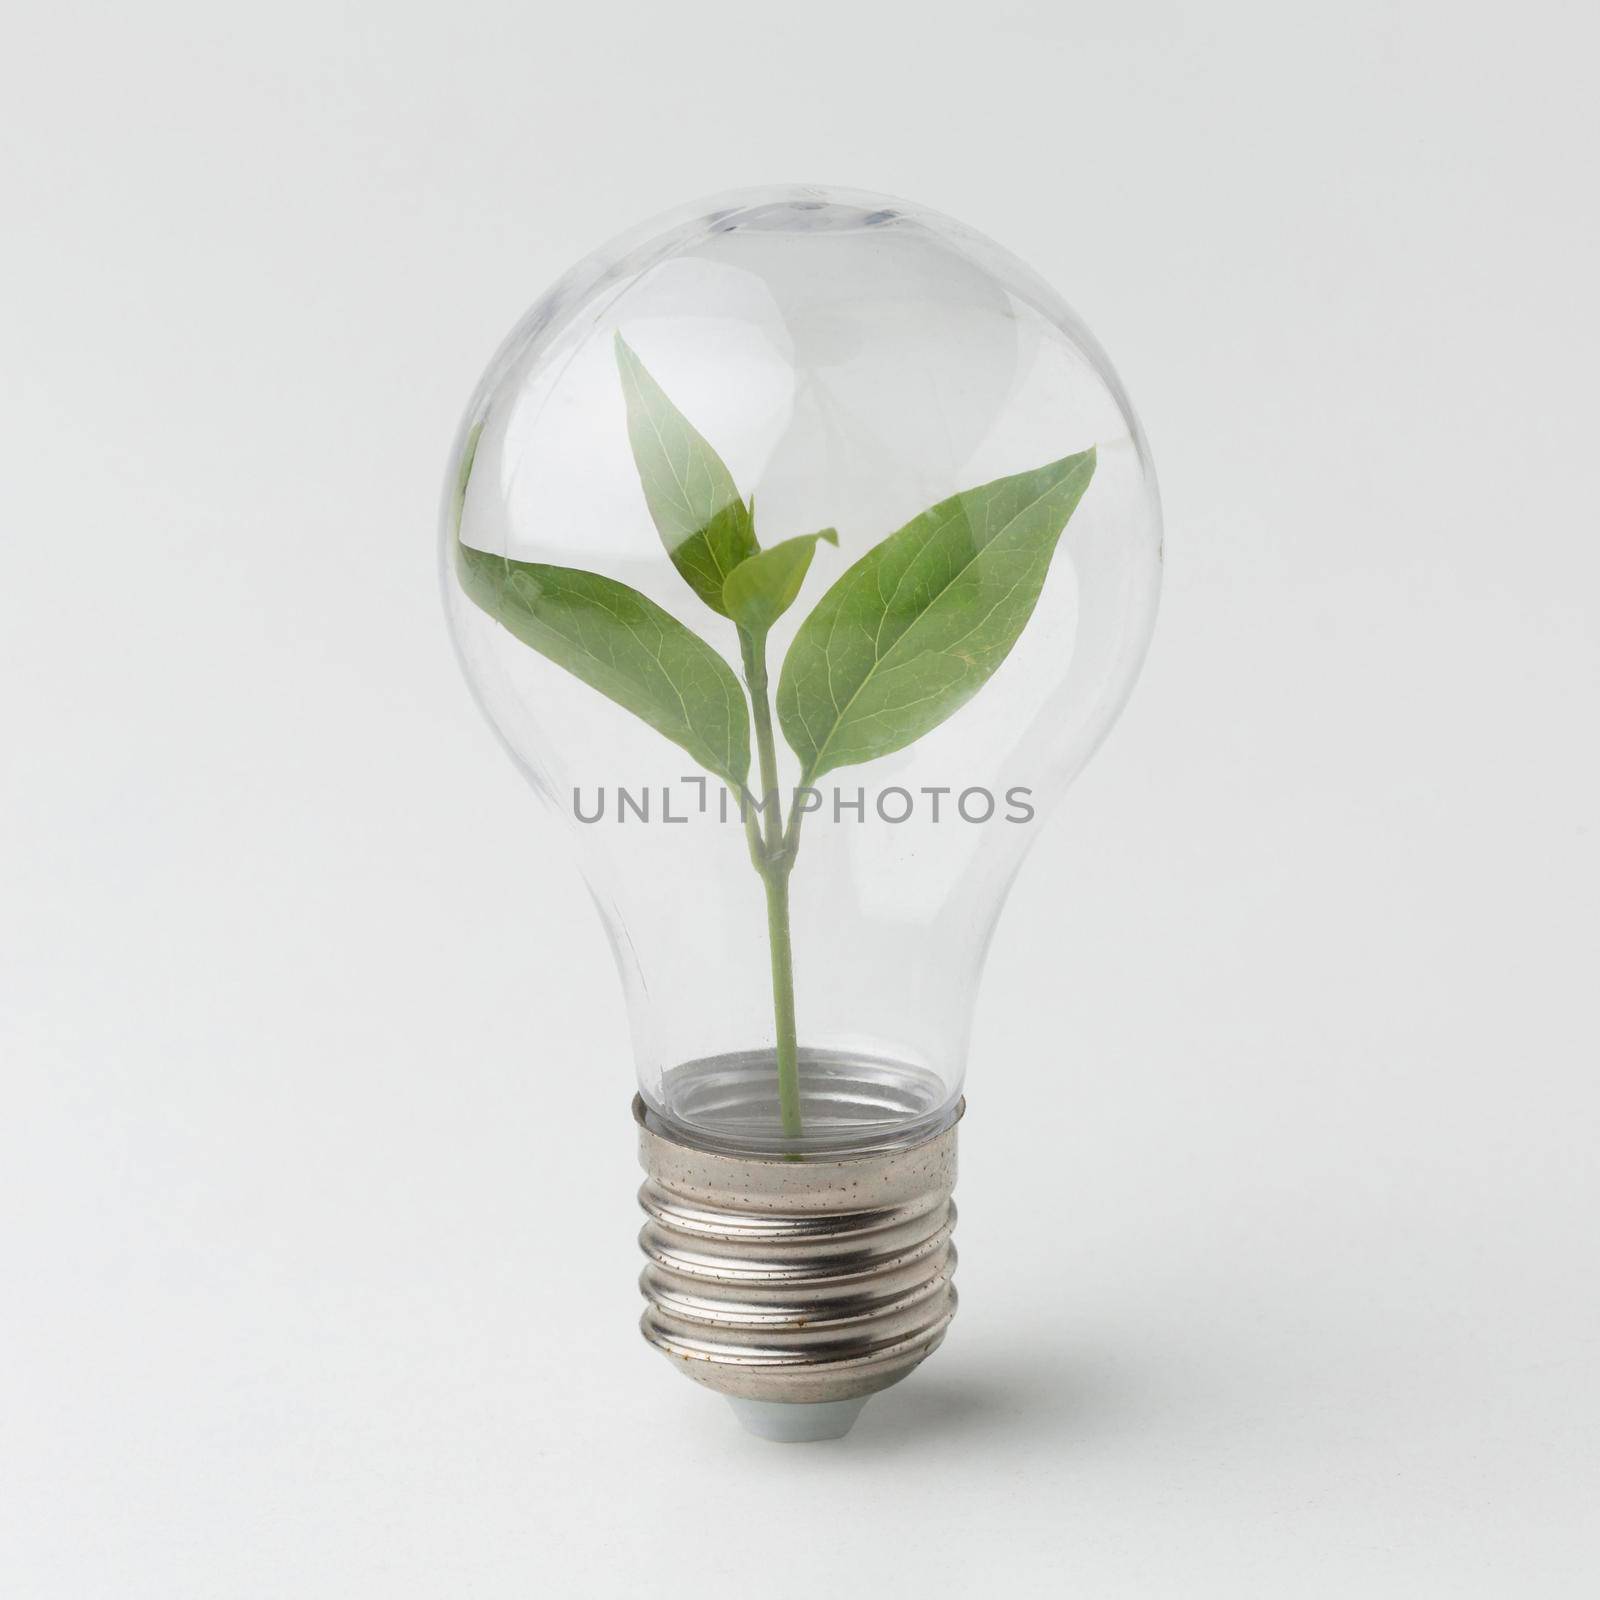 small plant inside light bulb. High quality photo by Zahard